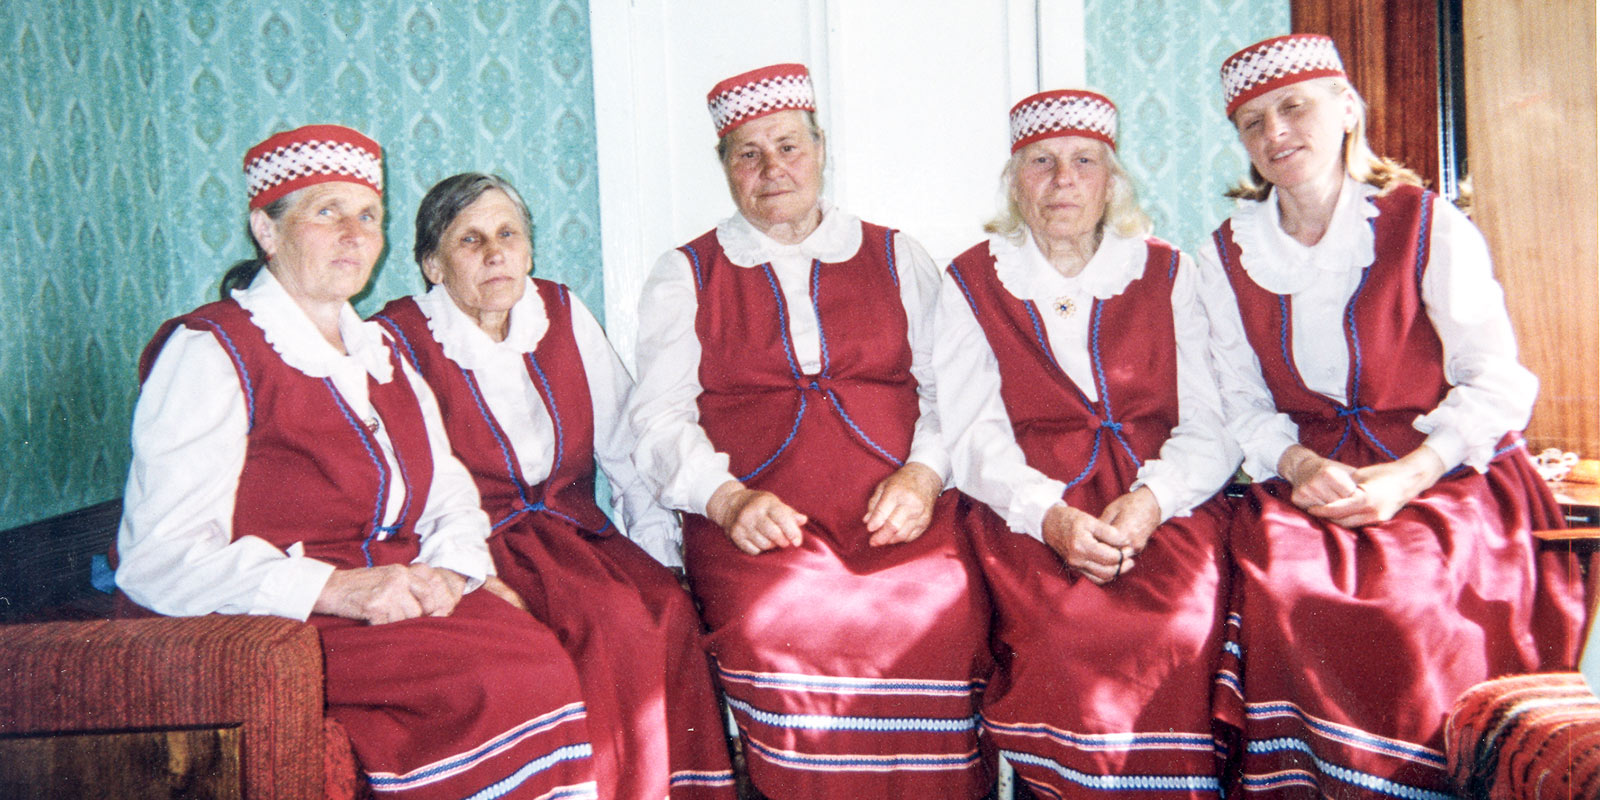 Members of the Zolotaya Niva folklore ensemble: Rosalie Taits, Leonora Haller, Lonni Ilves, Emilie Illak, and Valentina Illak. Photo: A. Korb 1995.